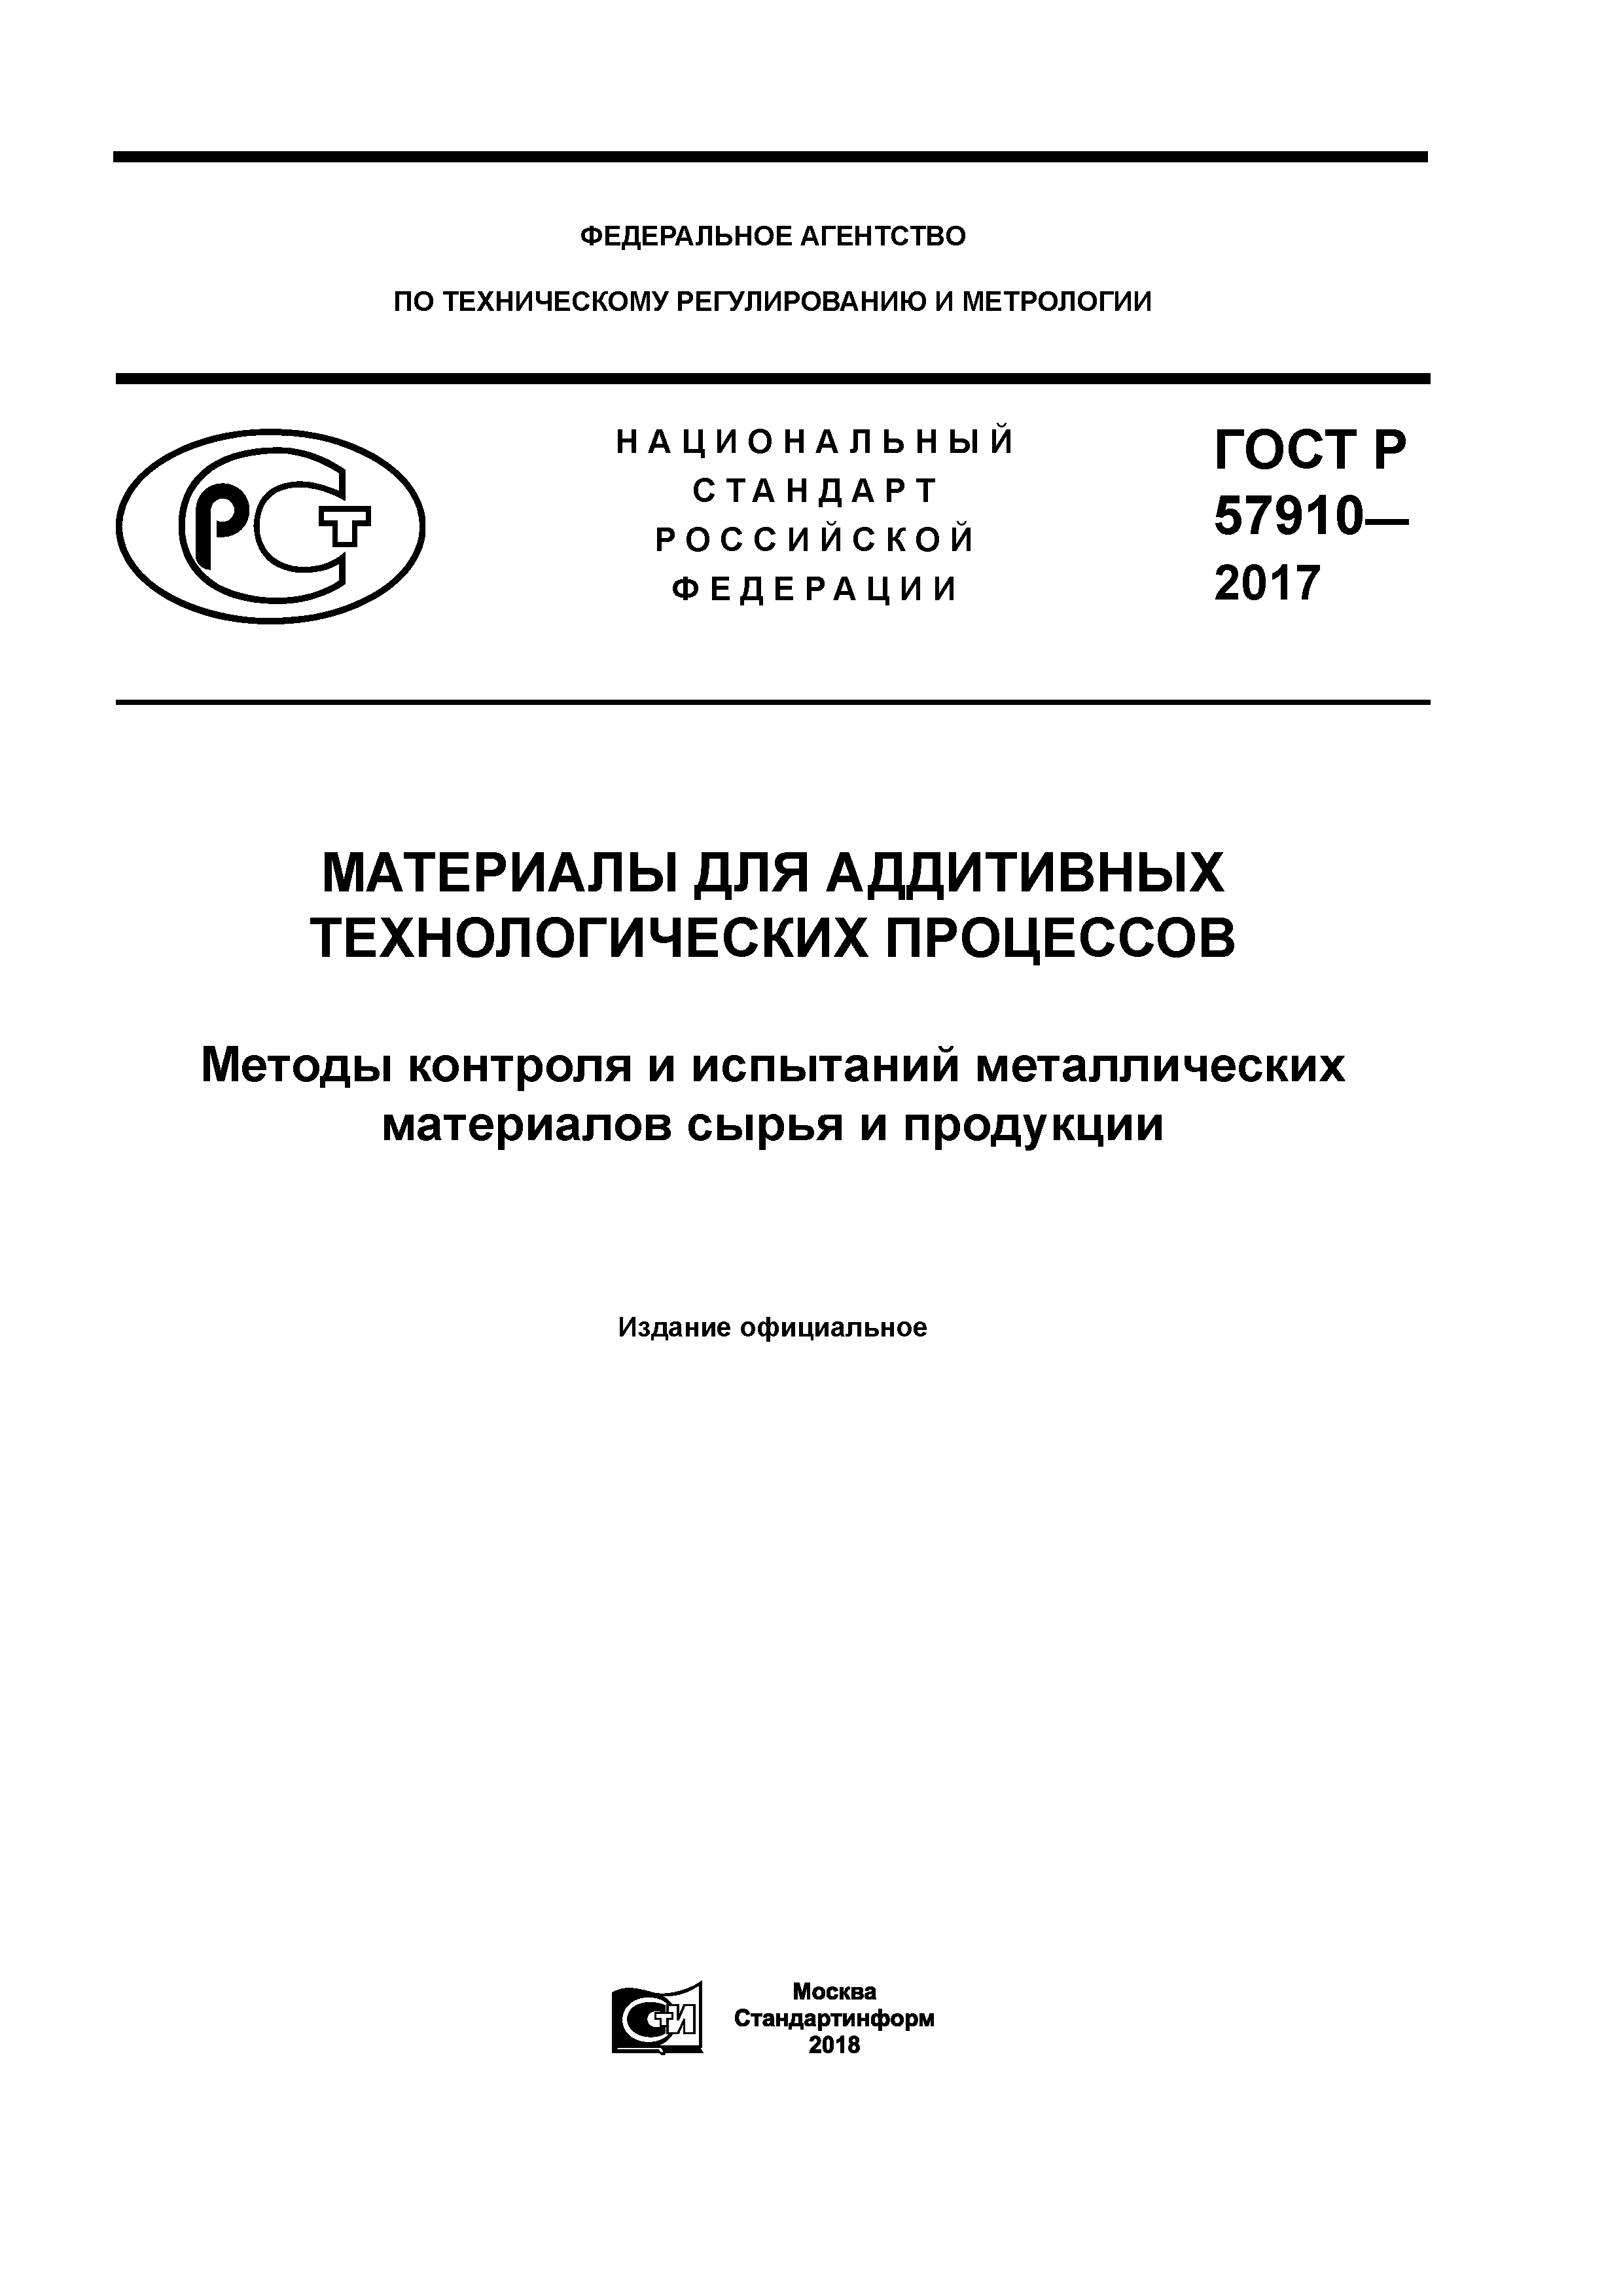 ГОСТ Р 57910-2017